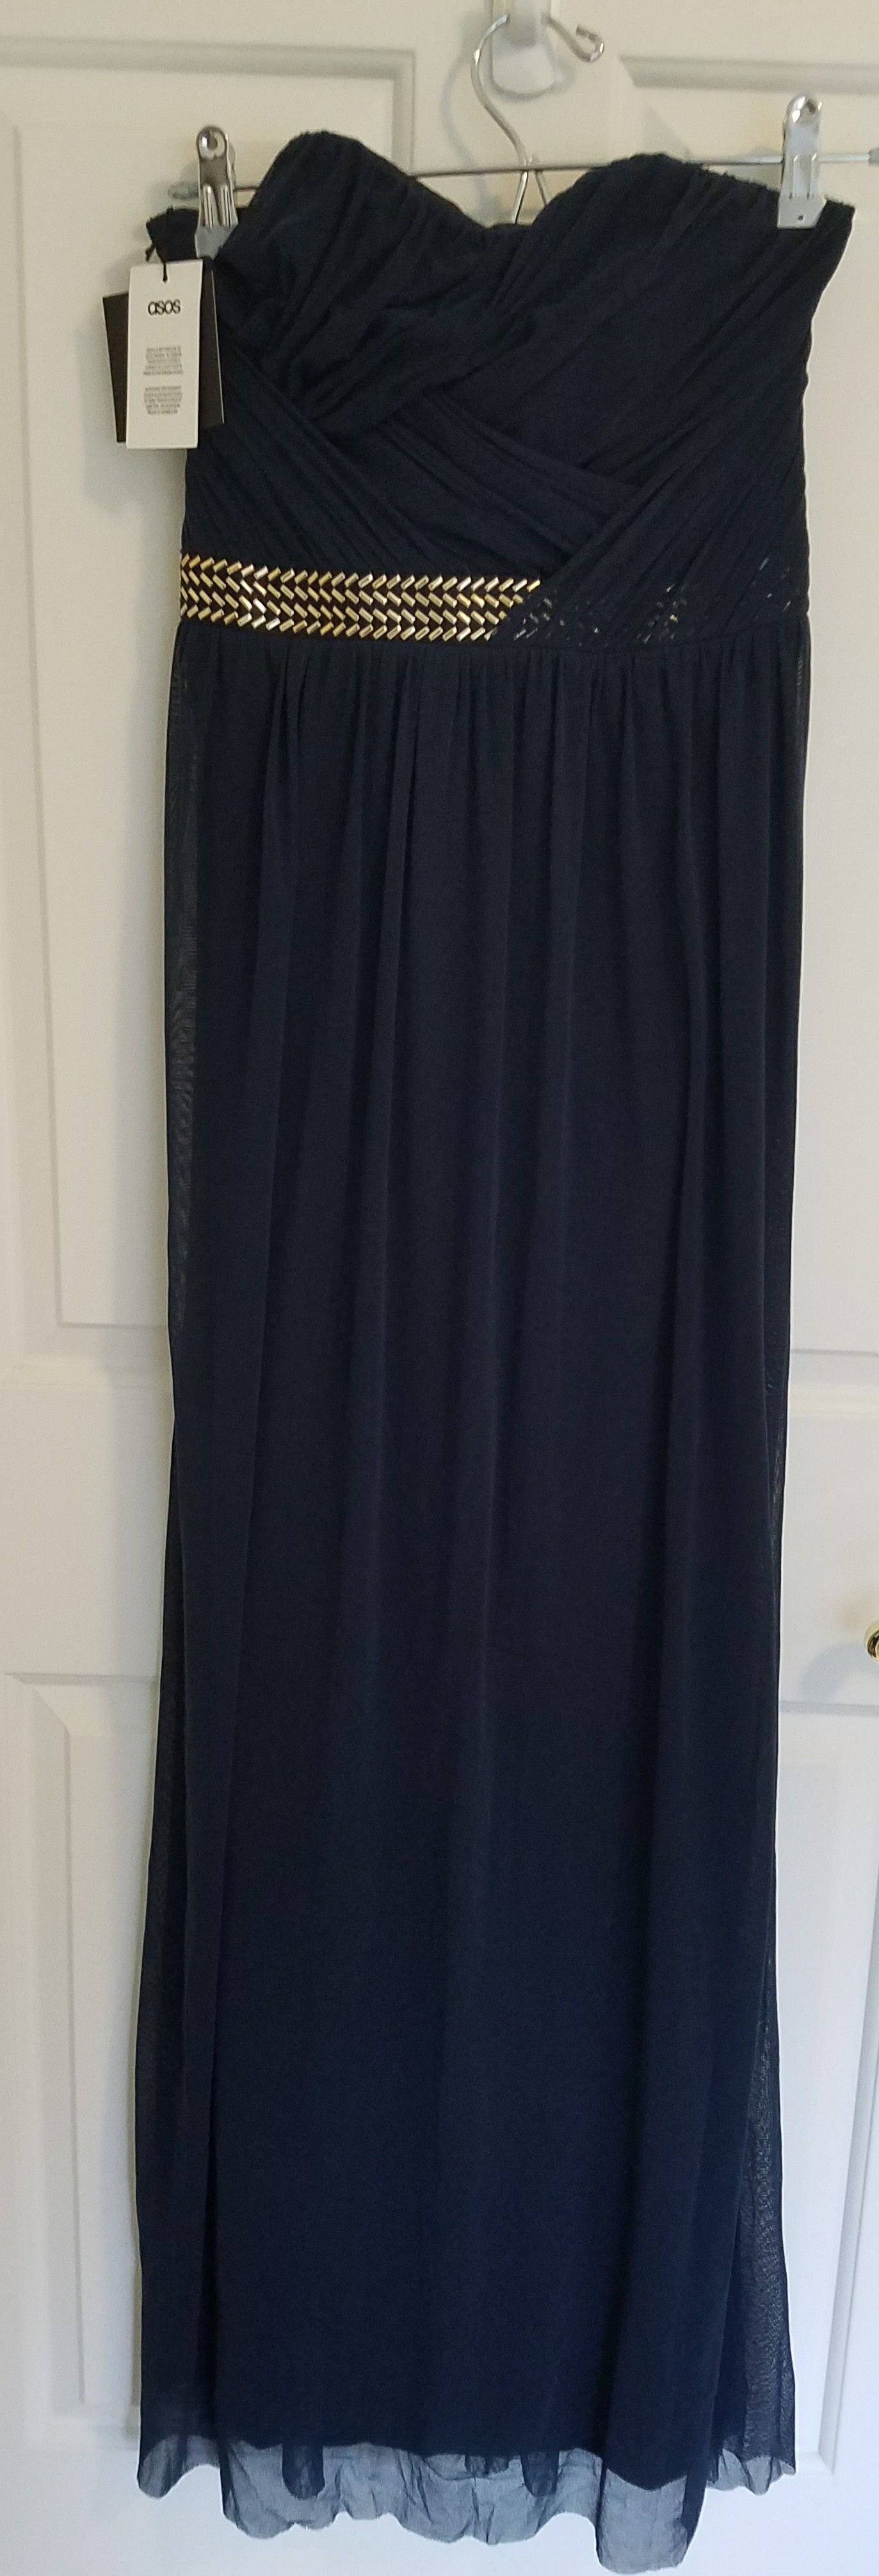 Dress 6/8 US size